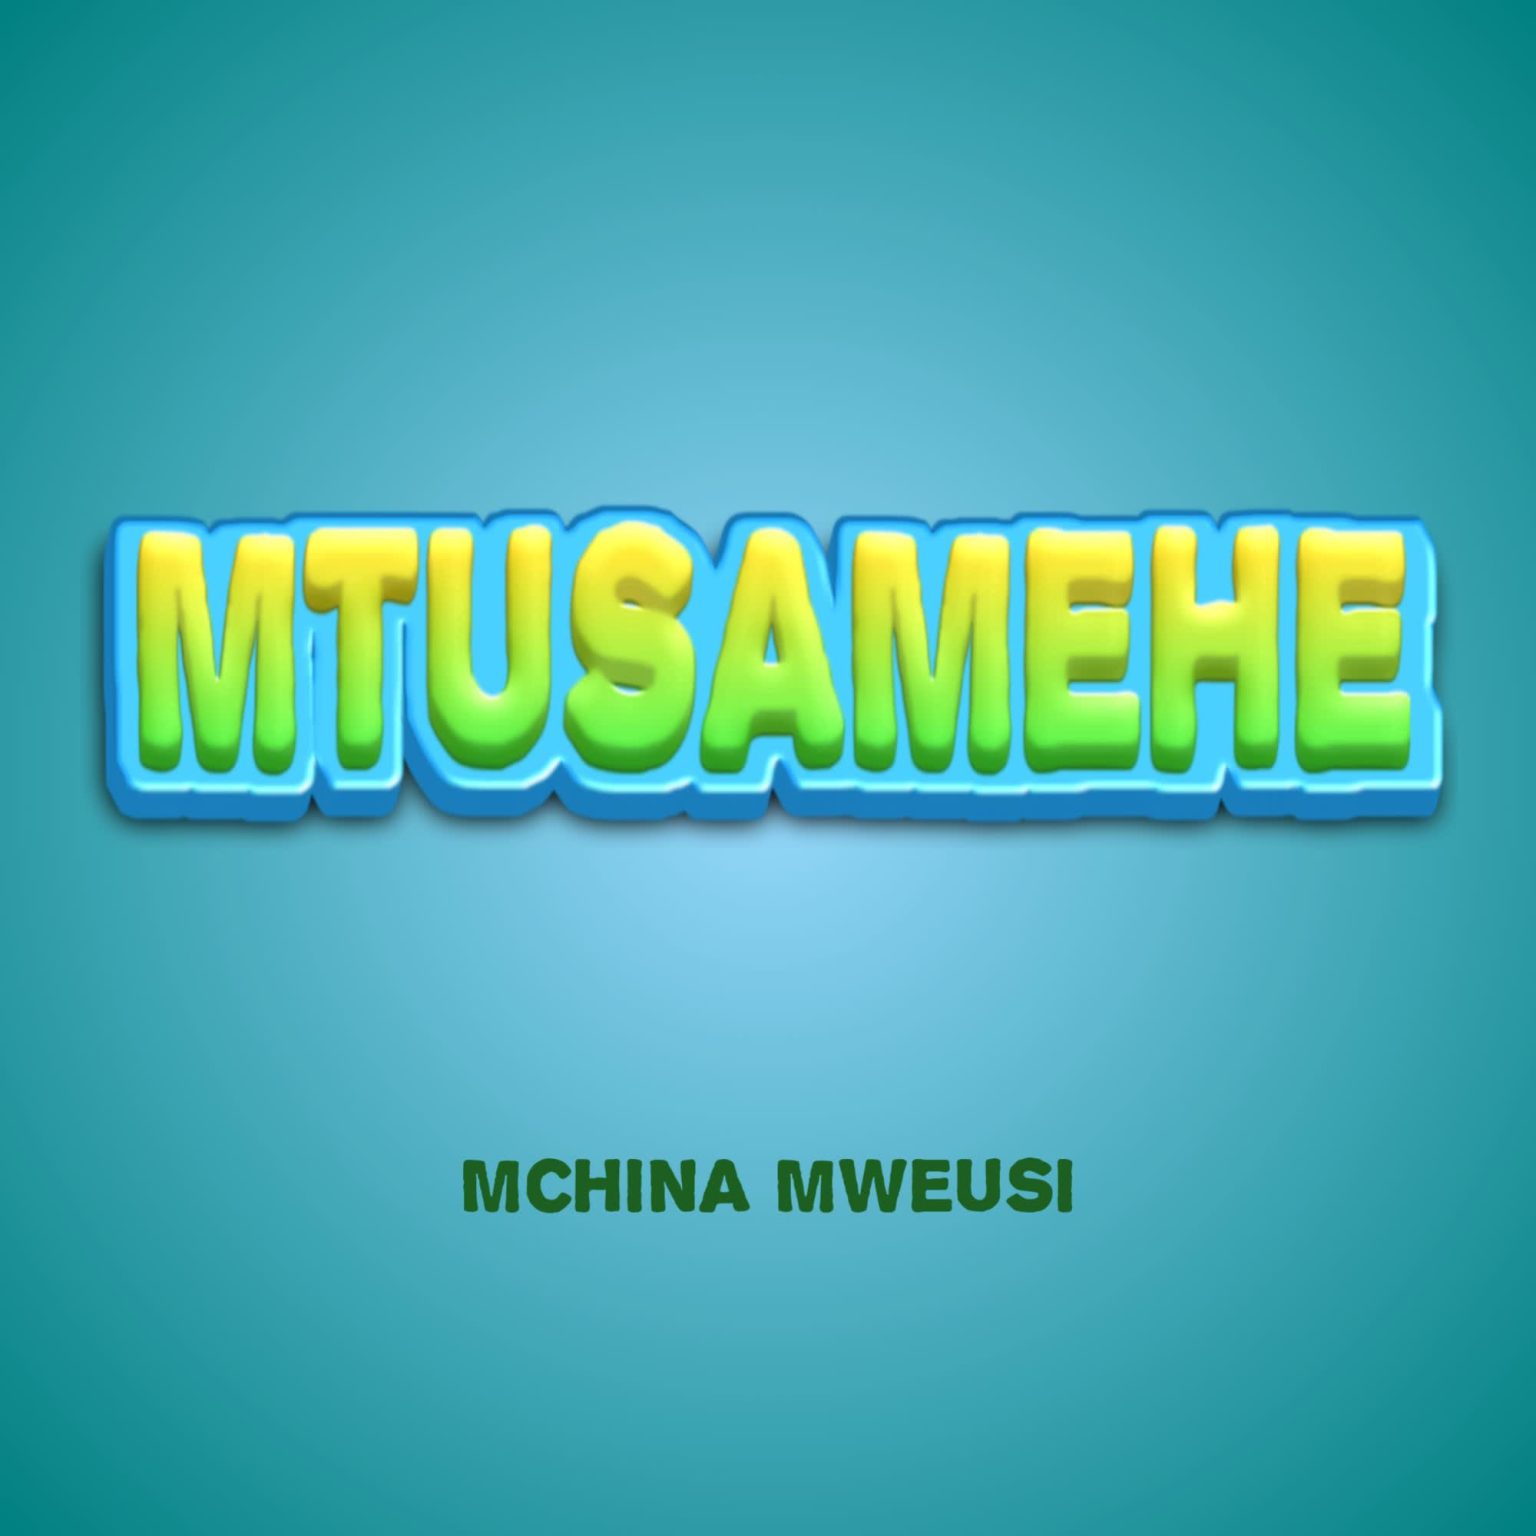  Mchina Mweusi – Mtusamehe